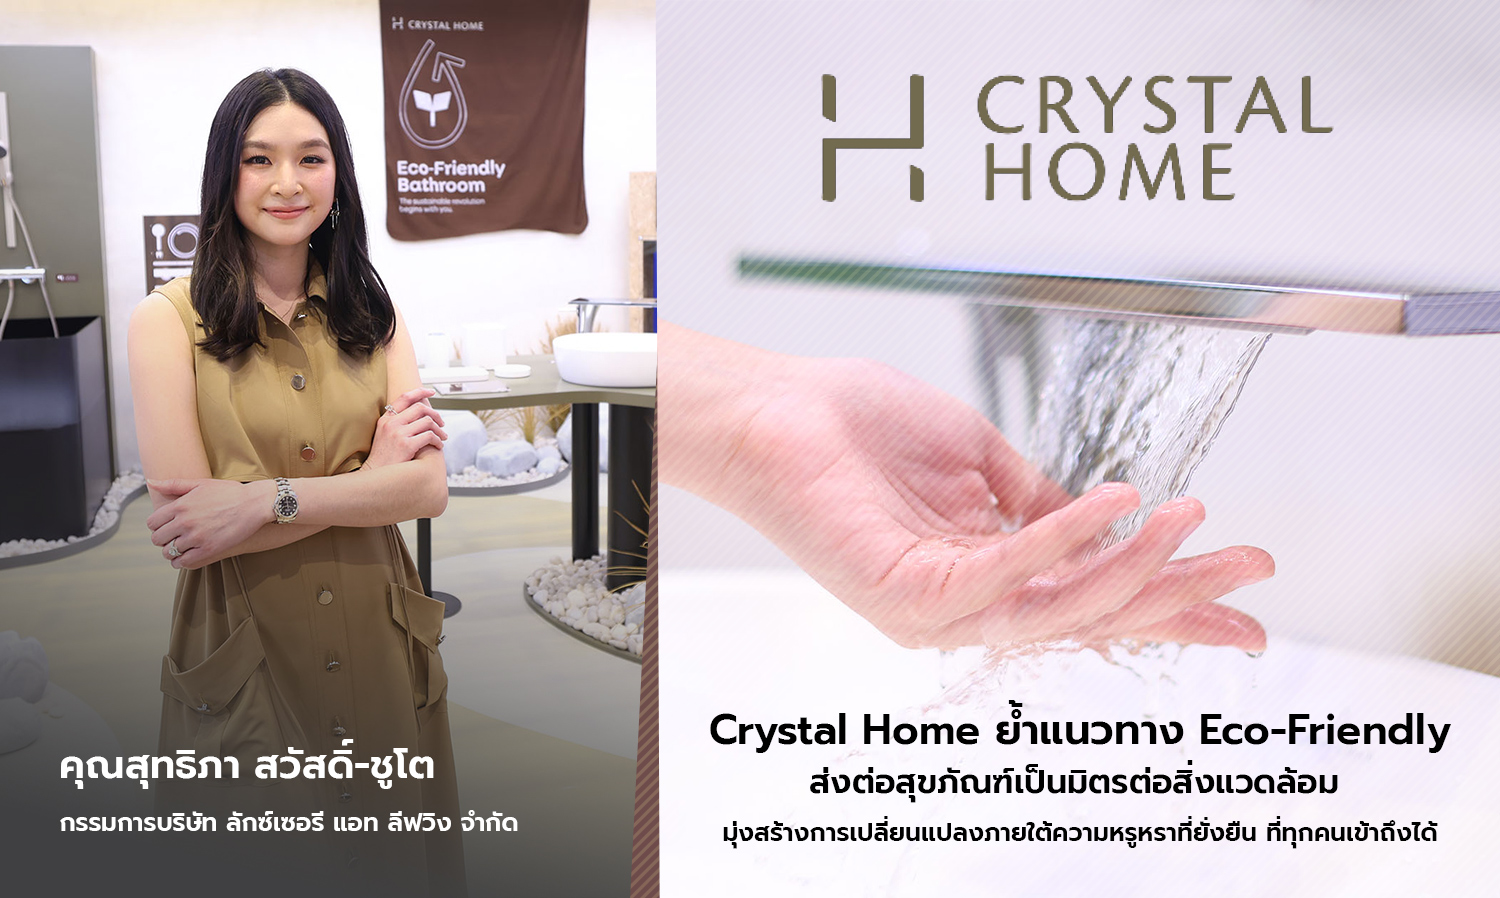 Crystal Home ย้ำแนวทาง Eco-Friendly ส่งต่อสุขภัณฑ์เป็นมิตรต่อสิ่งแวดล้อม  มุ่งสร้างการเปลี่ยนแปลงภายใต้ความหรูหราที่ยั่งยืน ที่ทุกคนเข้าถึงได้